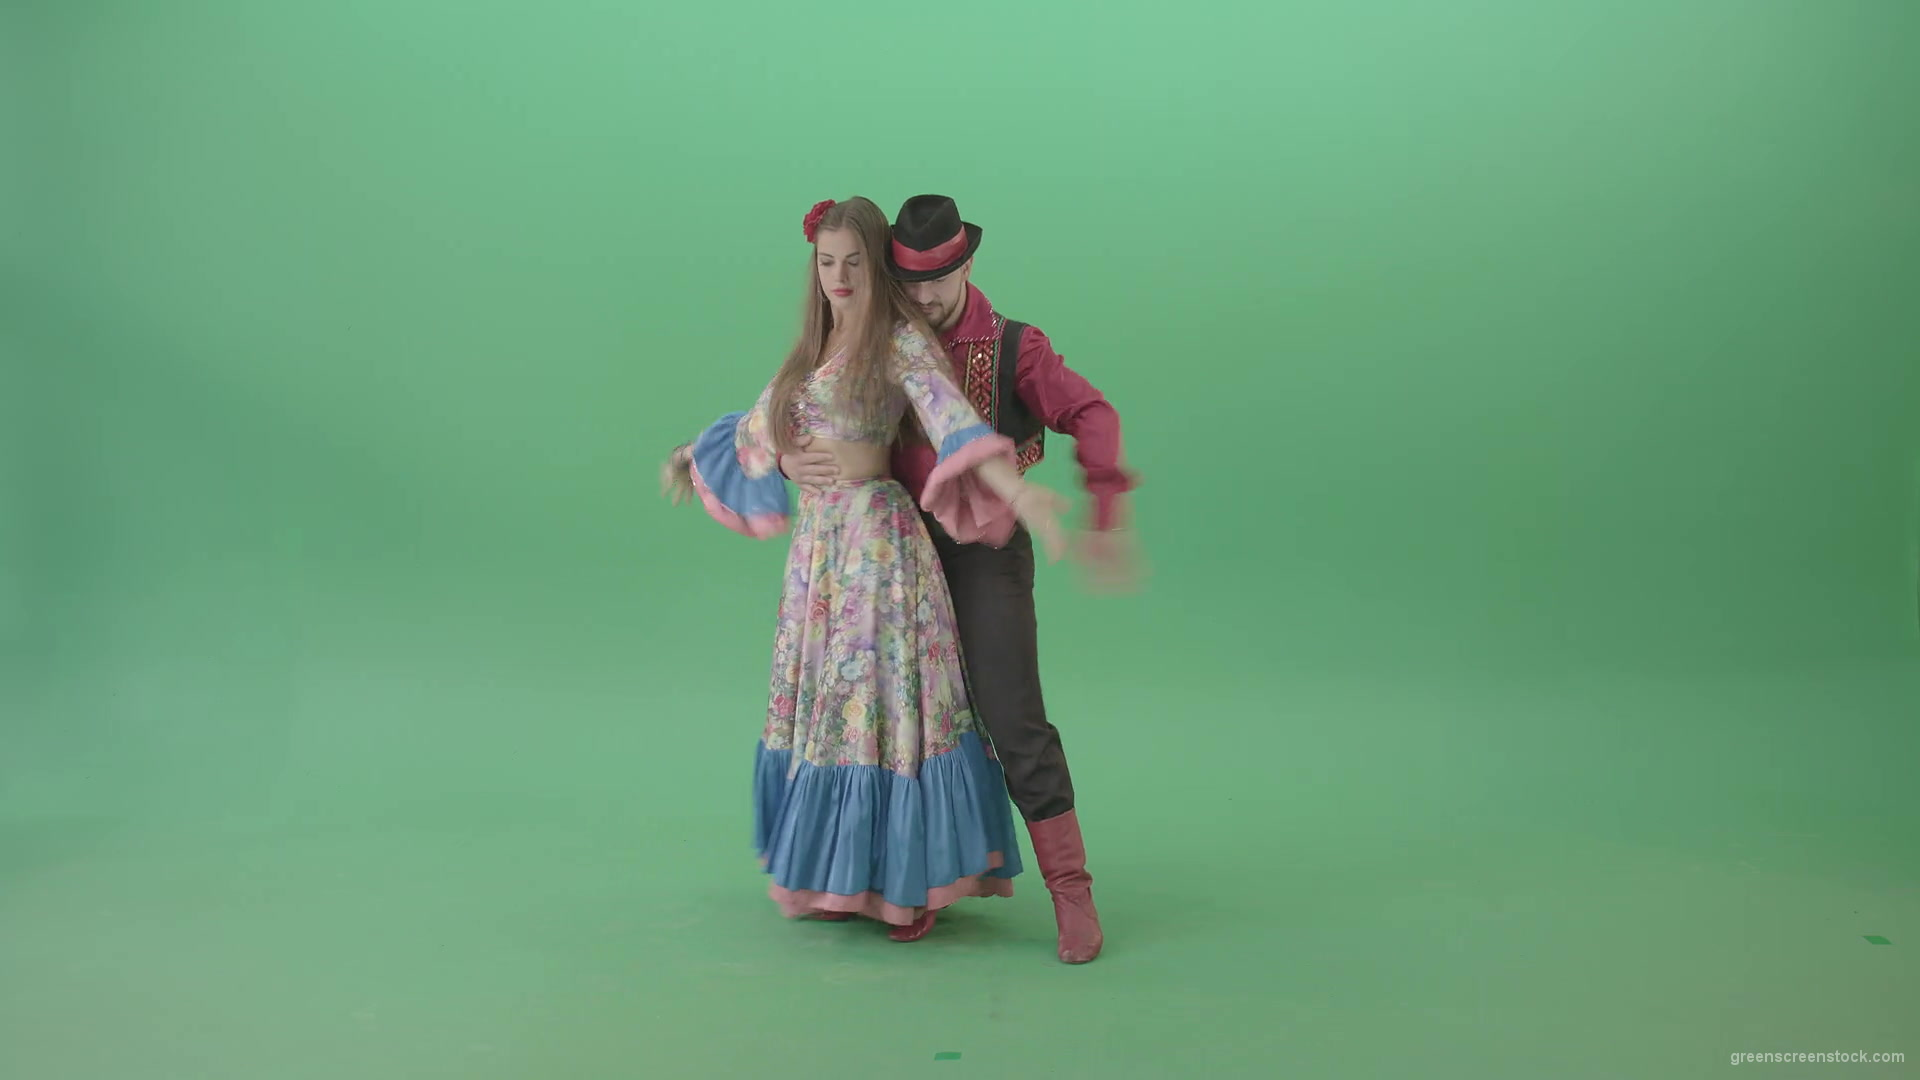 Love-Story-dance-by-gypsian-folk-people-in-balkan-dress-isolated-on-green-screen-4K-video-footage-1920_006 Green Screen Stock